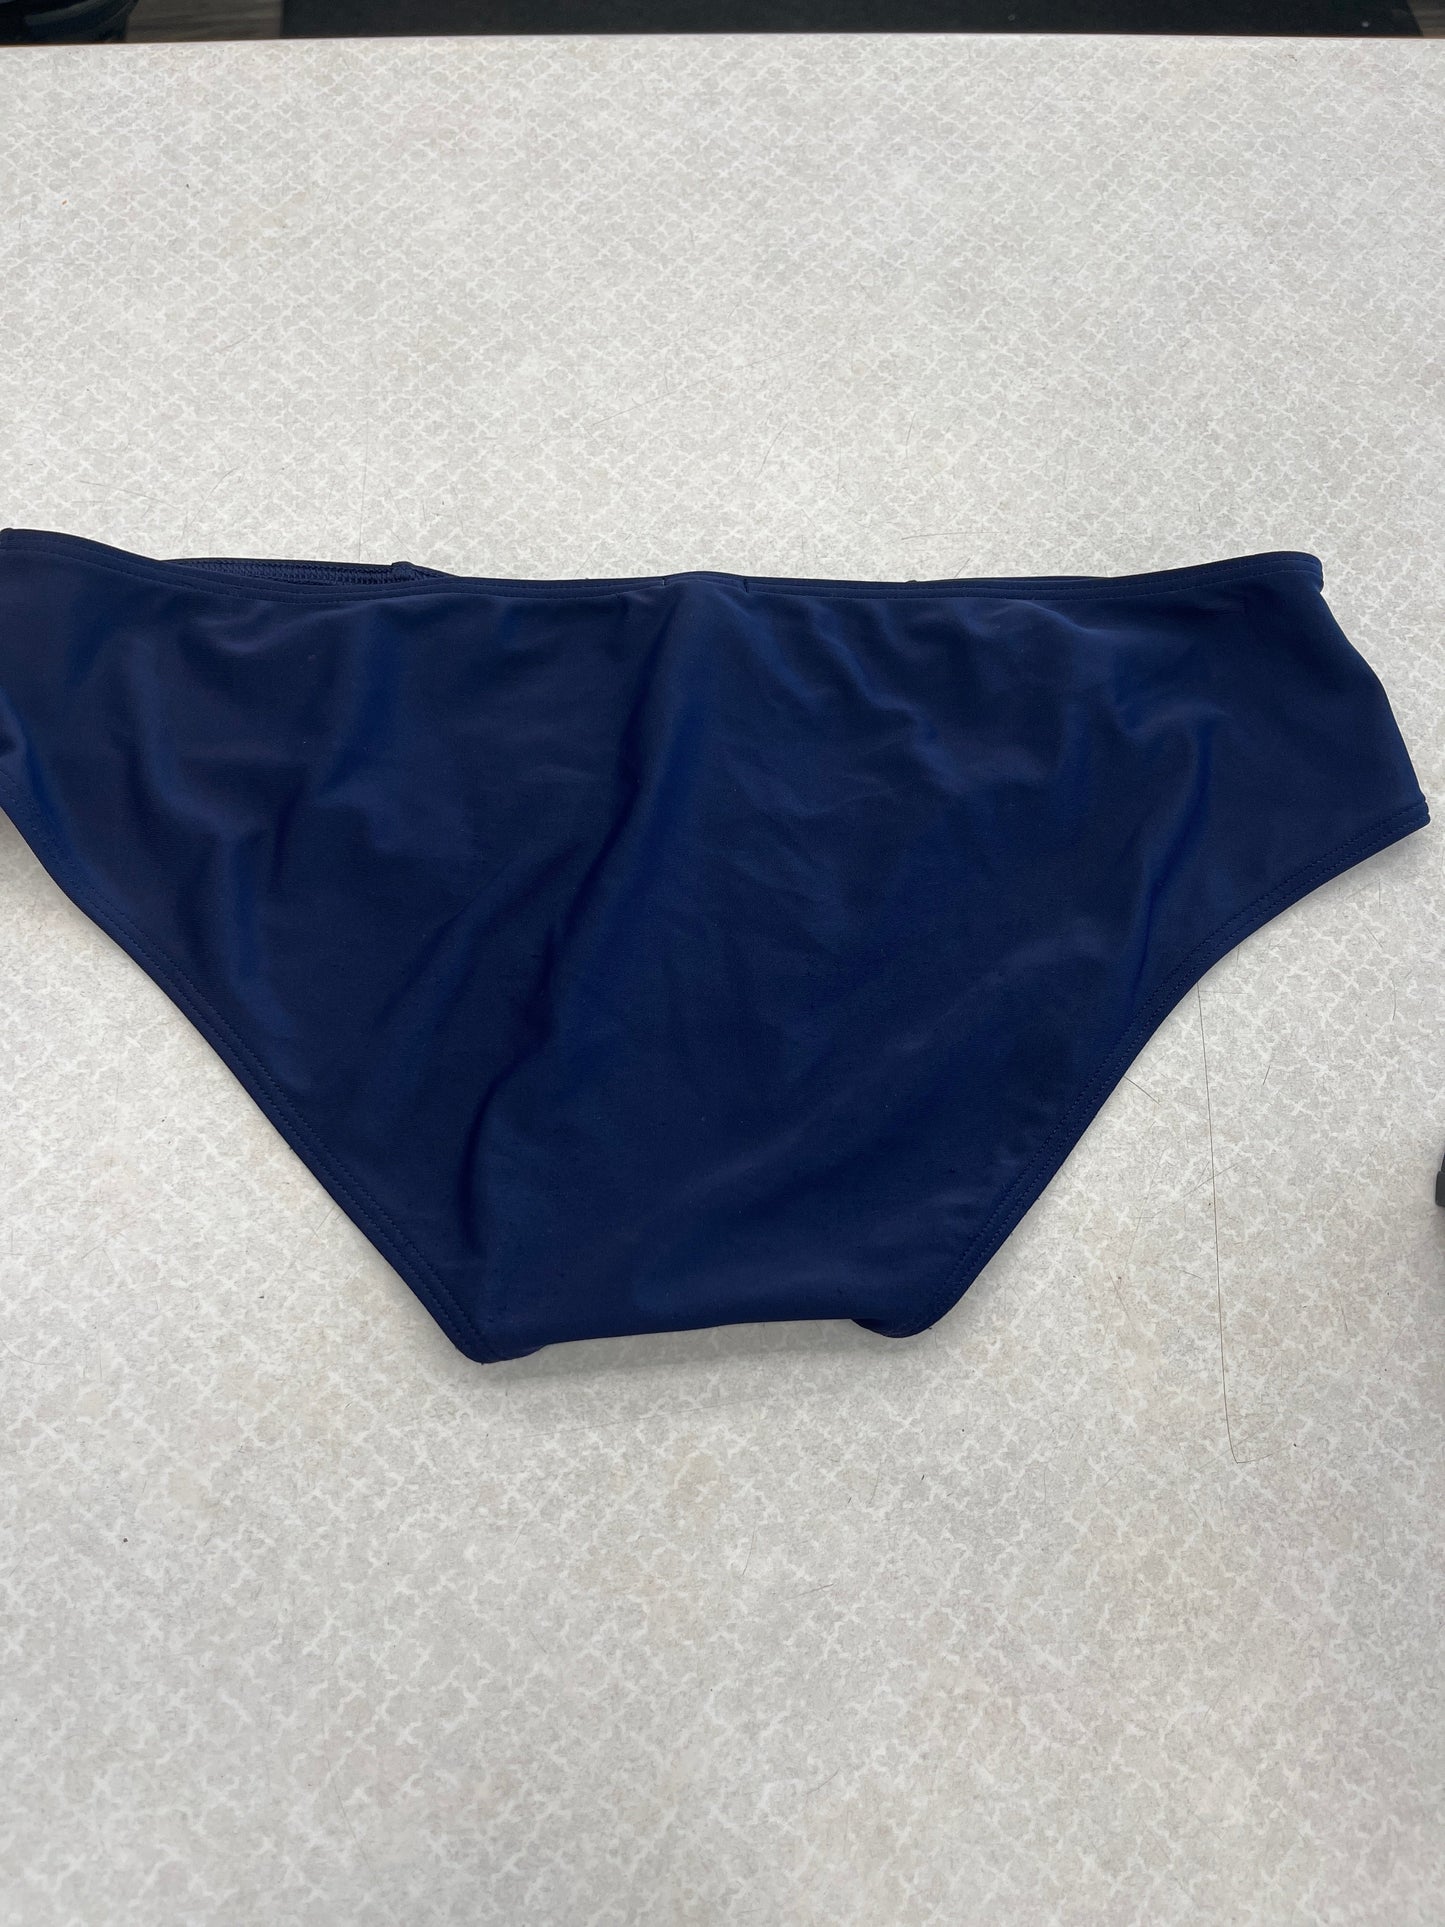 Blue Swimsuit Bottom Aerie, Size L